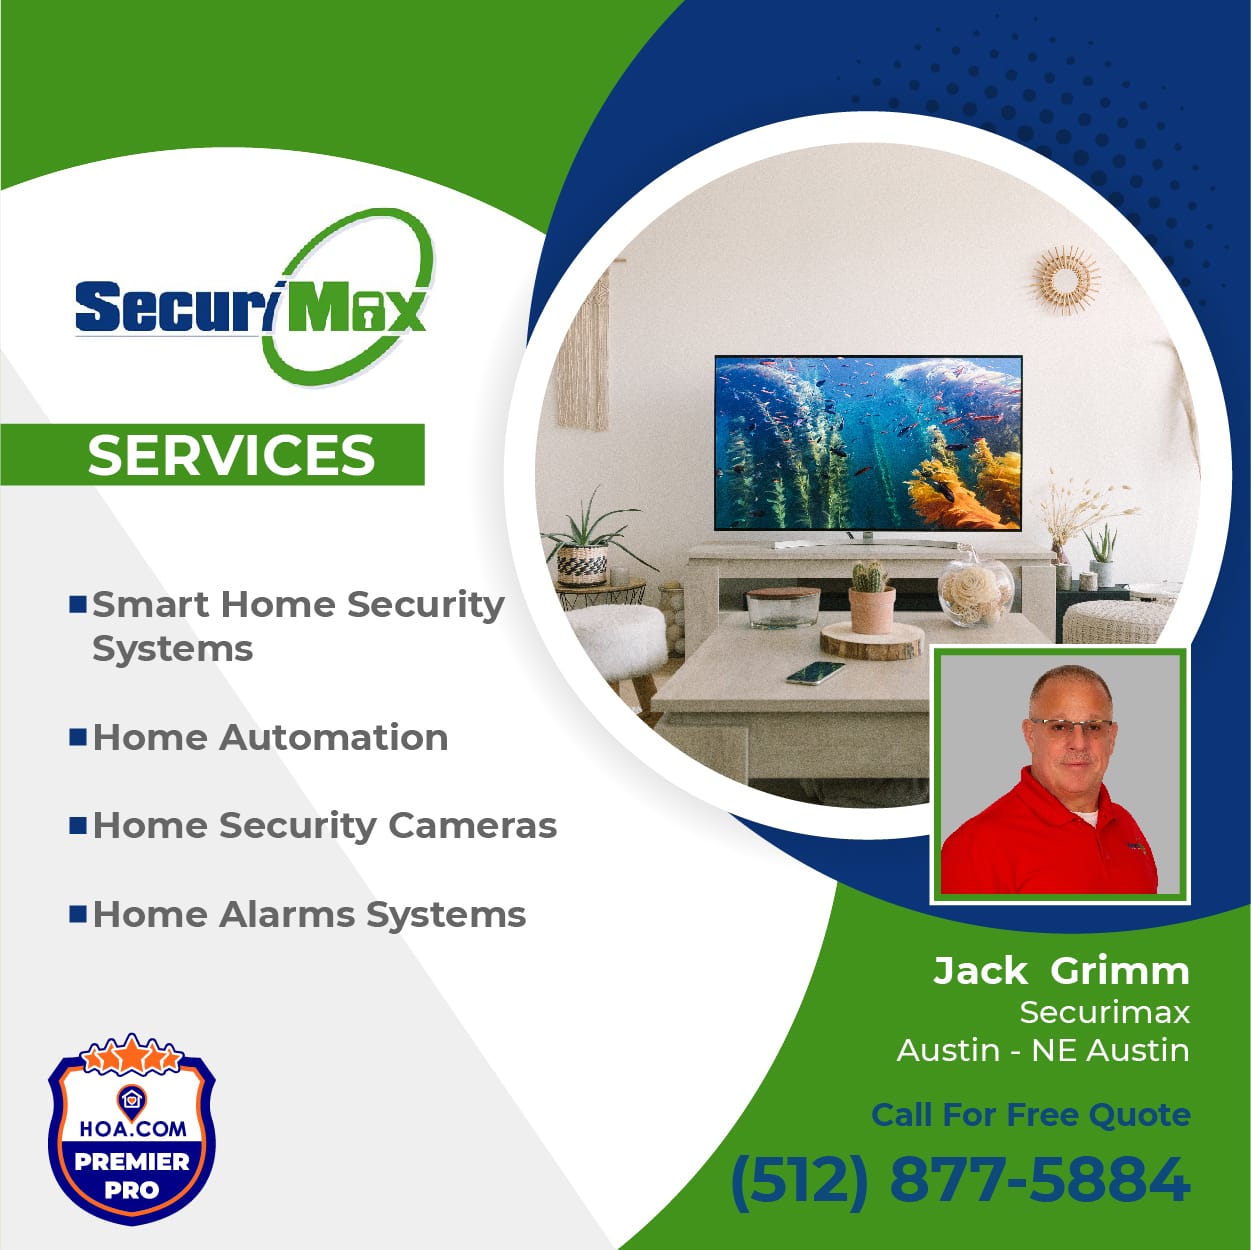 Securimax Services